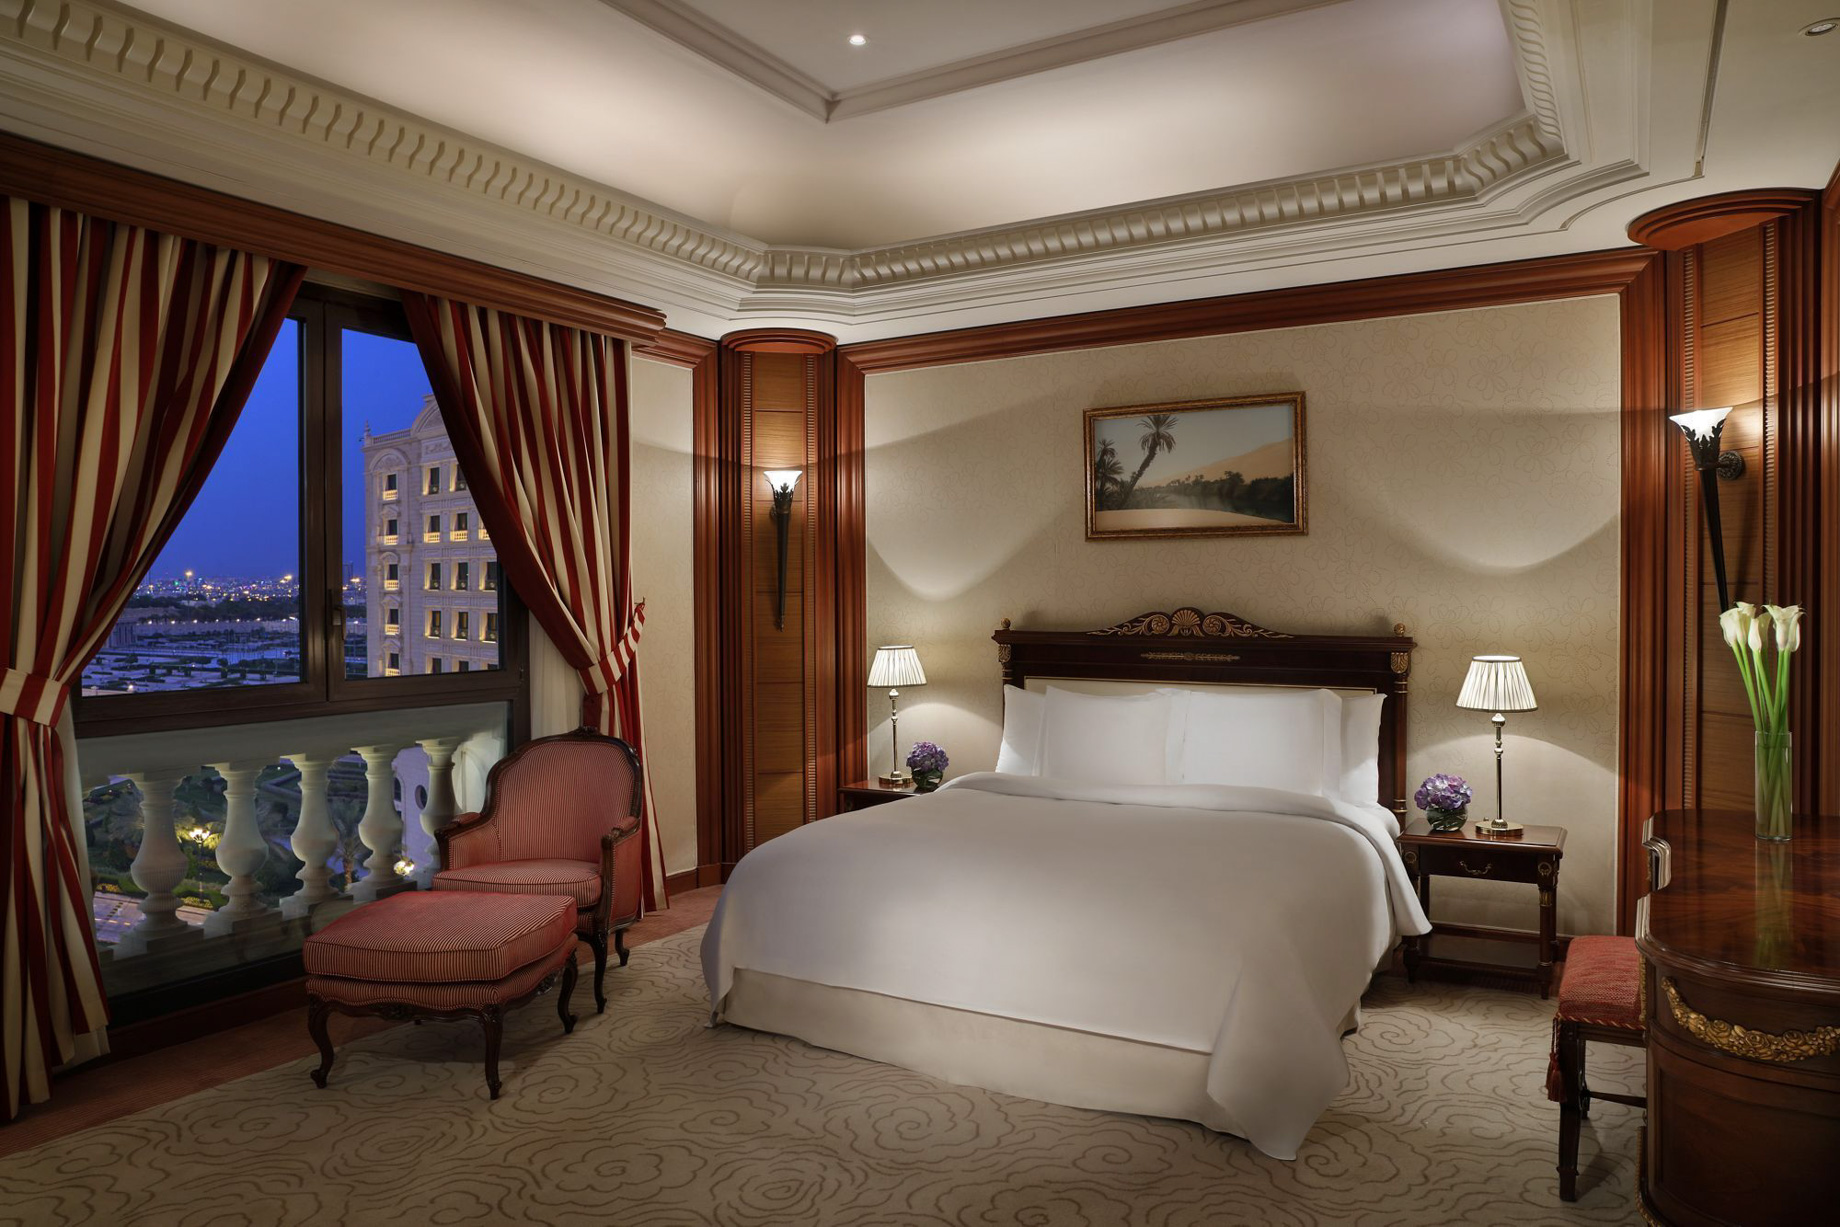 The Ritz-Carlton, Riyadh Hotel - Riyadh, Saudi Arabia - Executive Club Suite Bedroom